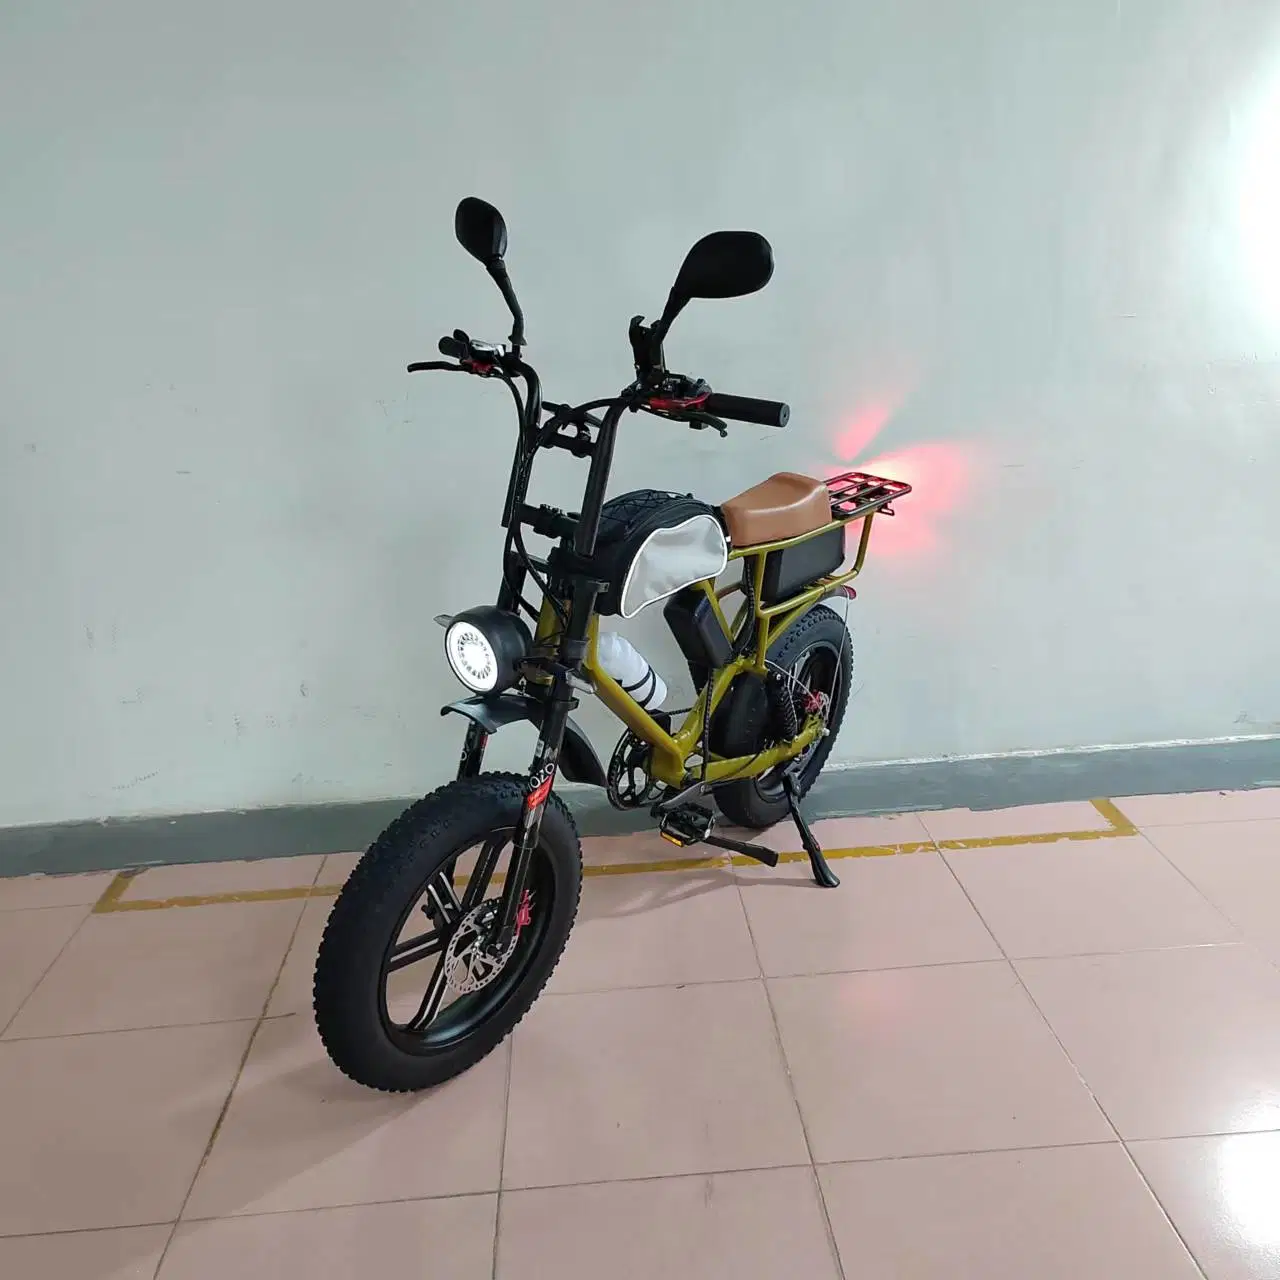 750W Bafang Motor 52V 22ah Samsung Battery Electric City Bike